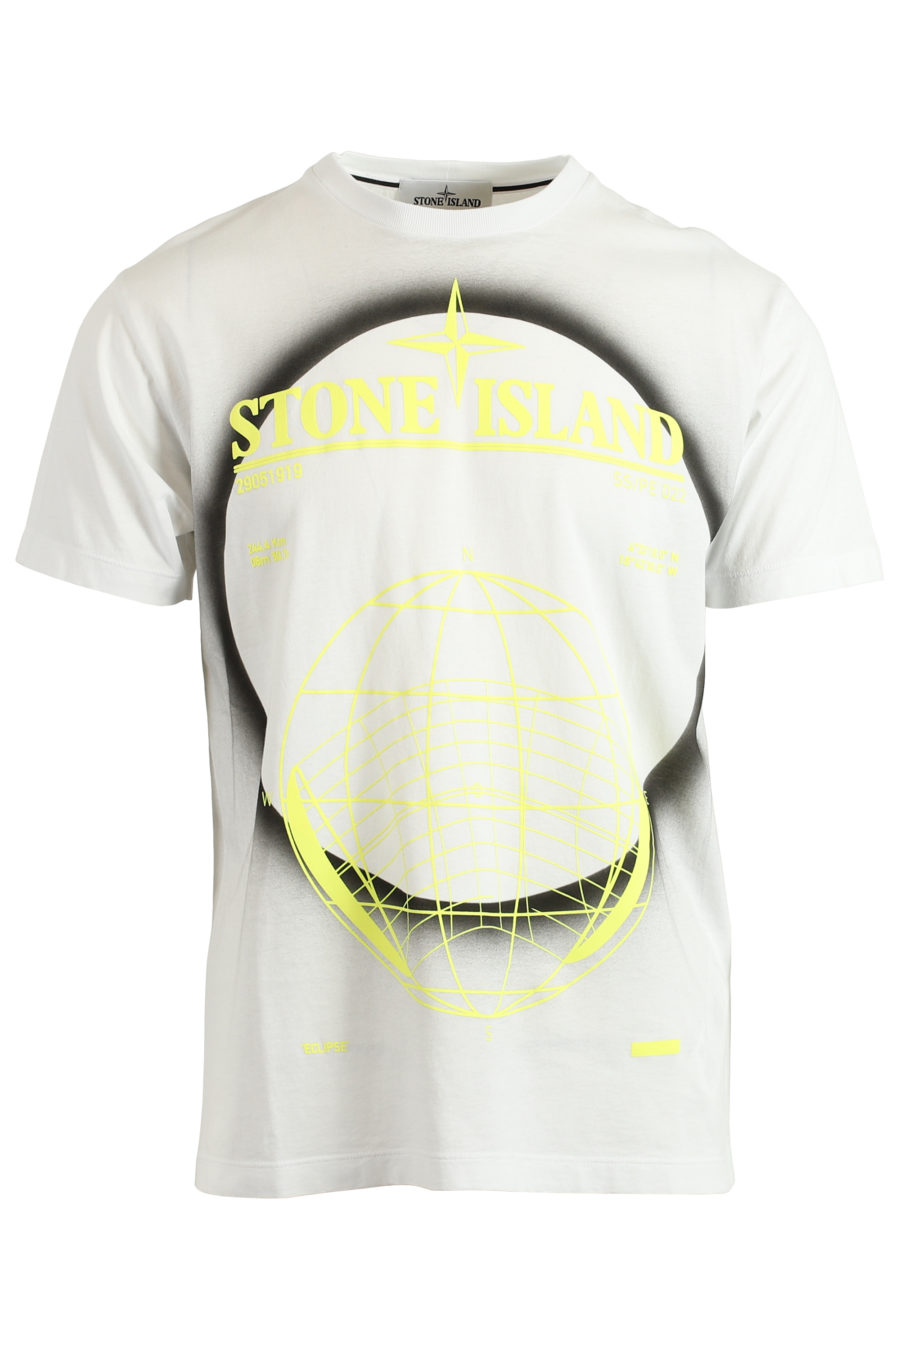 Camiseta blanca logo amarillo fluor - IMG 3711